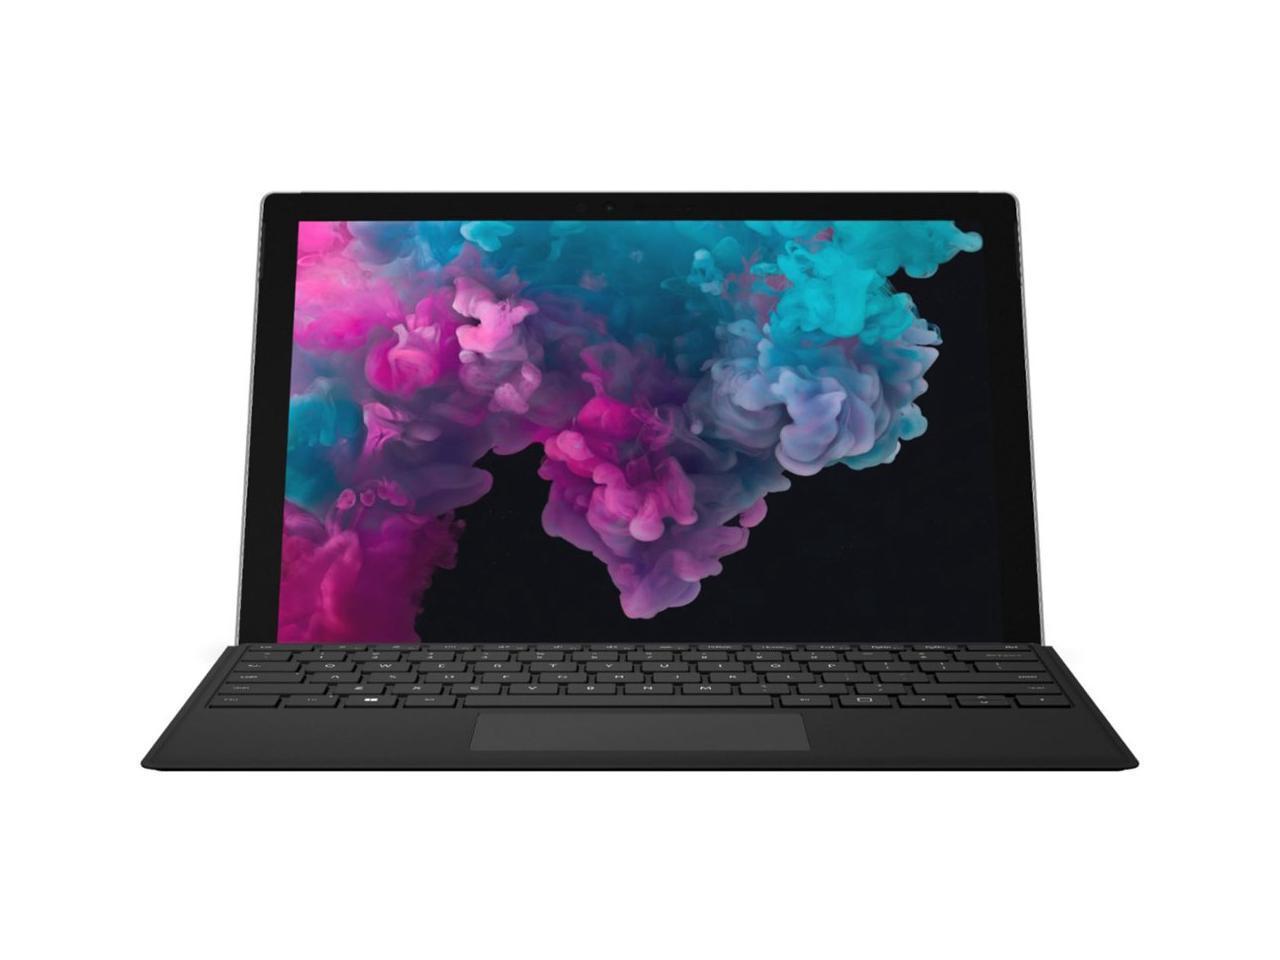 Newest Microsoft Surface Pro with Black Keyboard 12.3 inch Touchscreen Tablet | Intel Core M3 | 4GB RAM | 128GB SSD | WIFI | Bluetooth | Windows 10 Home |Platinum |BONUS ACCESSORY: SLEEVE